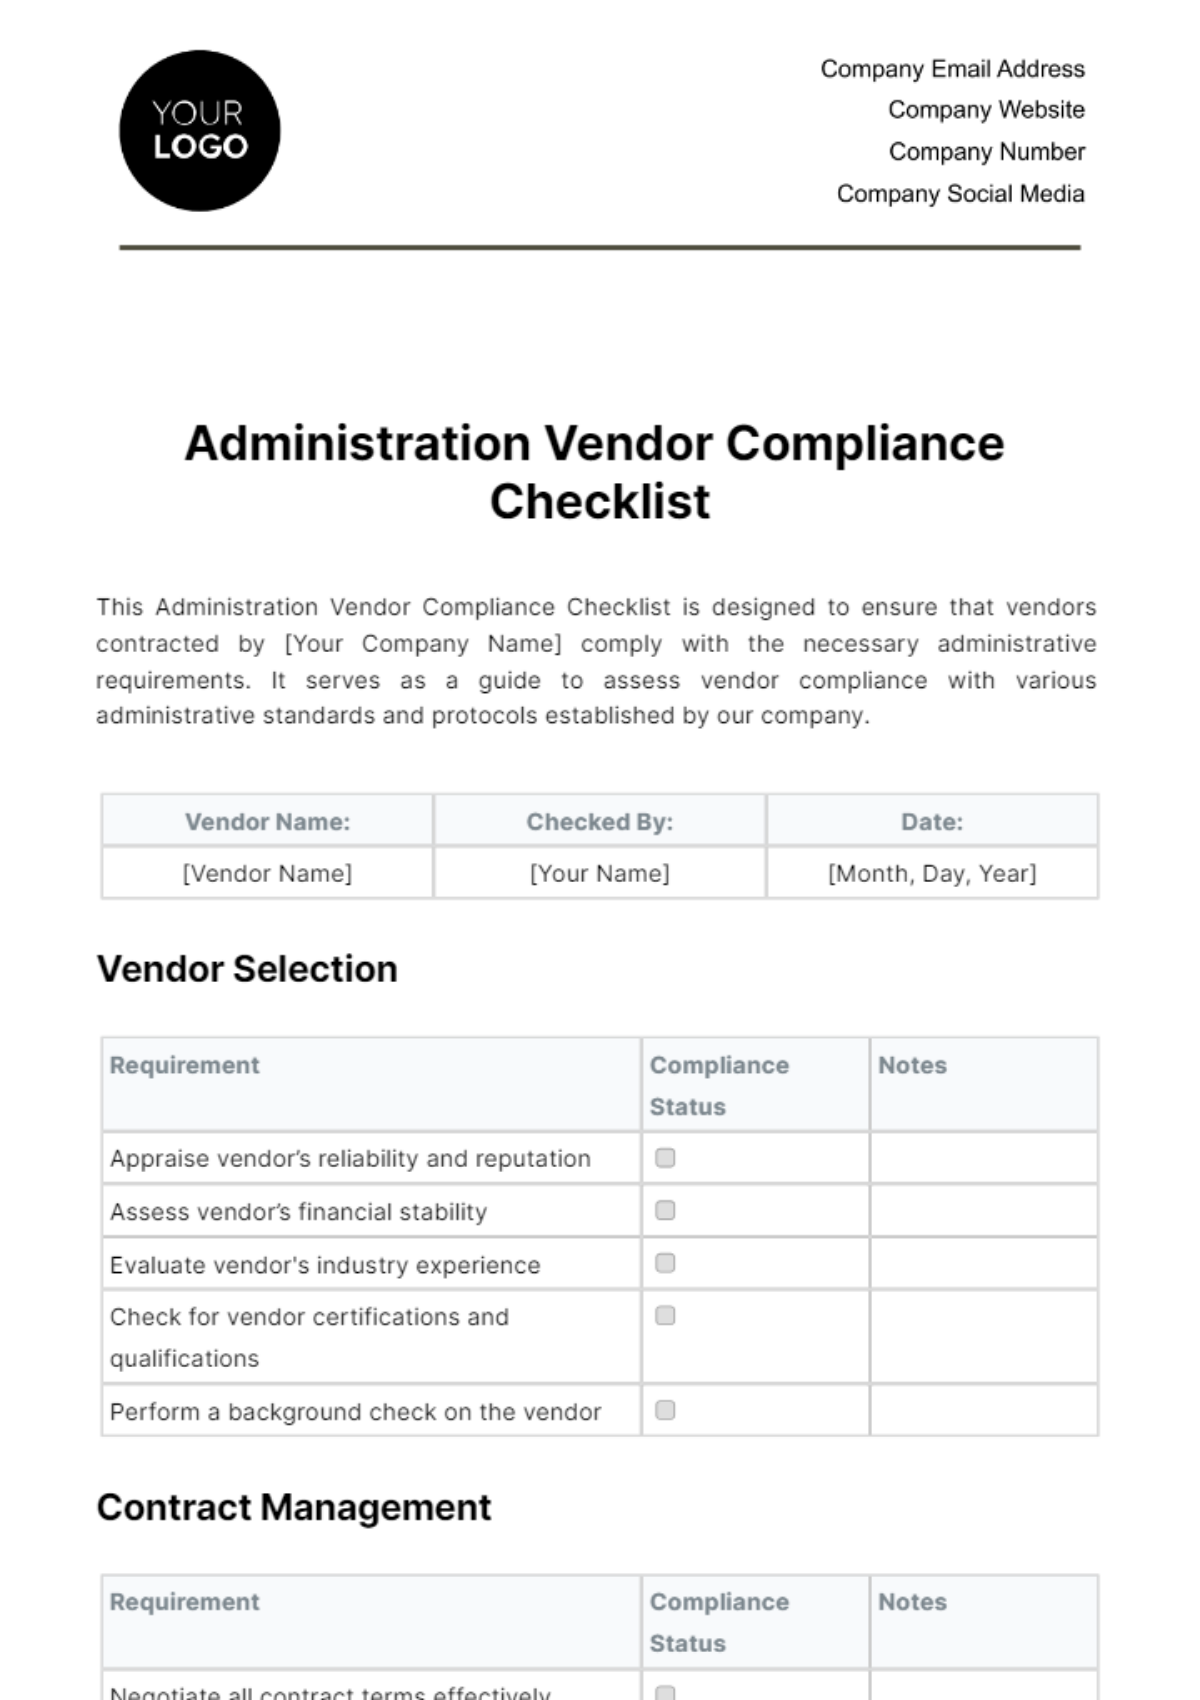 Administration Vendor Compliance Checklist Template